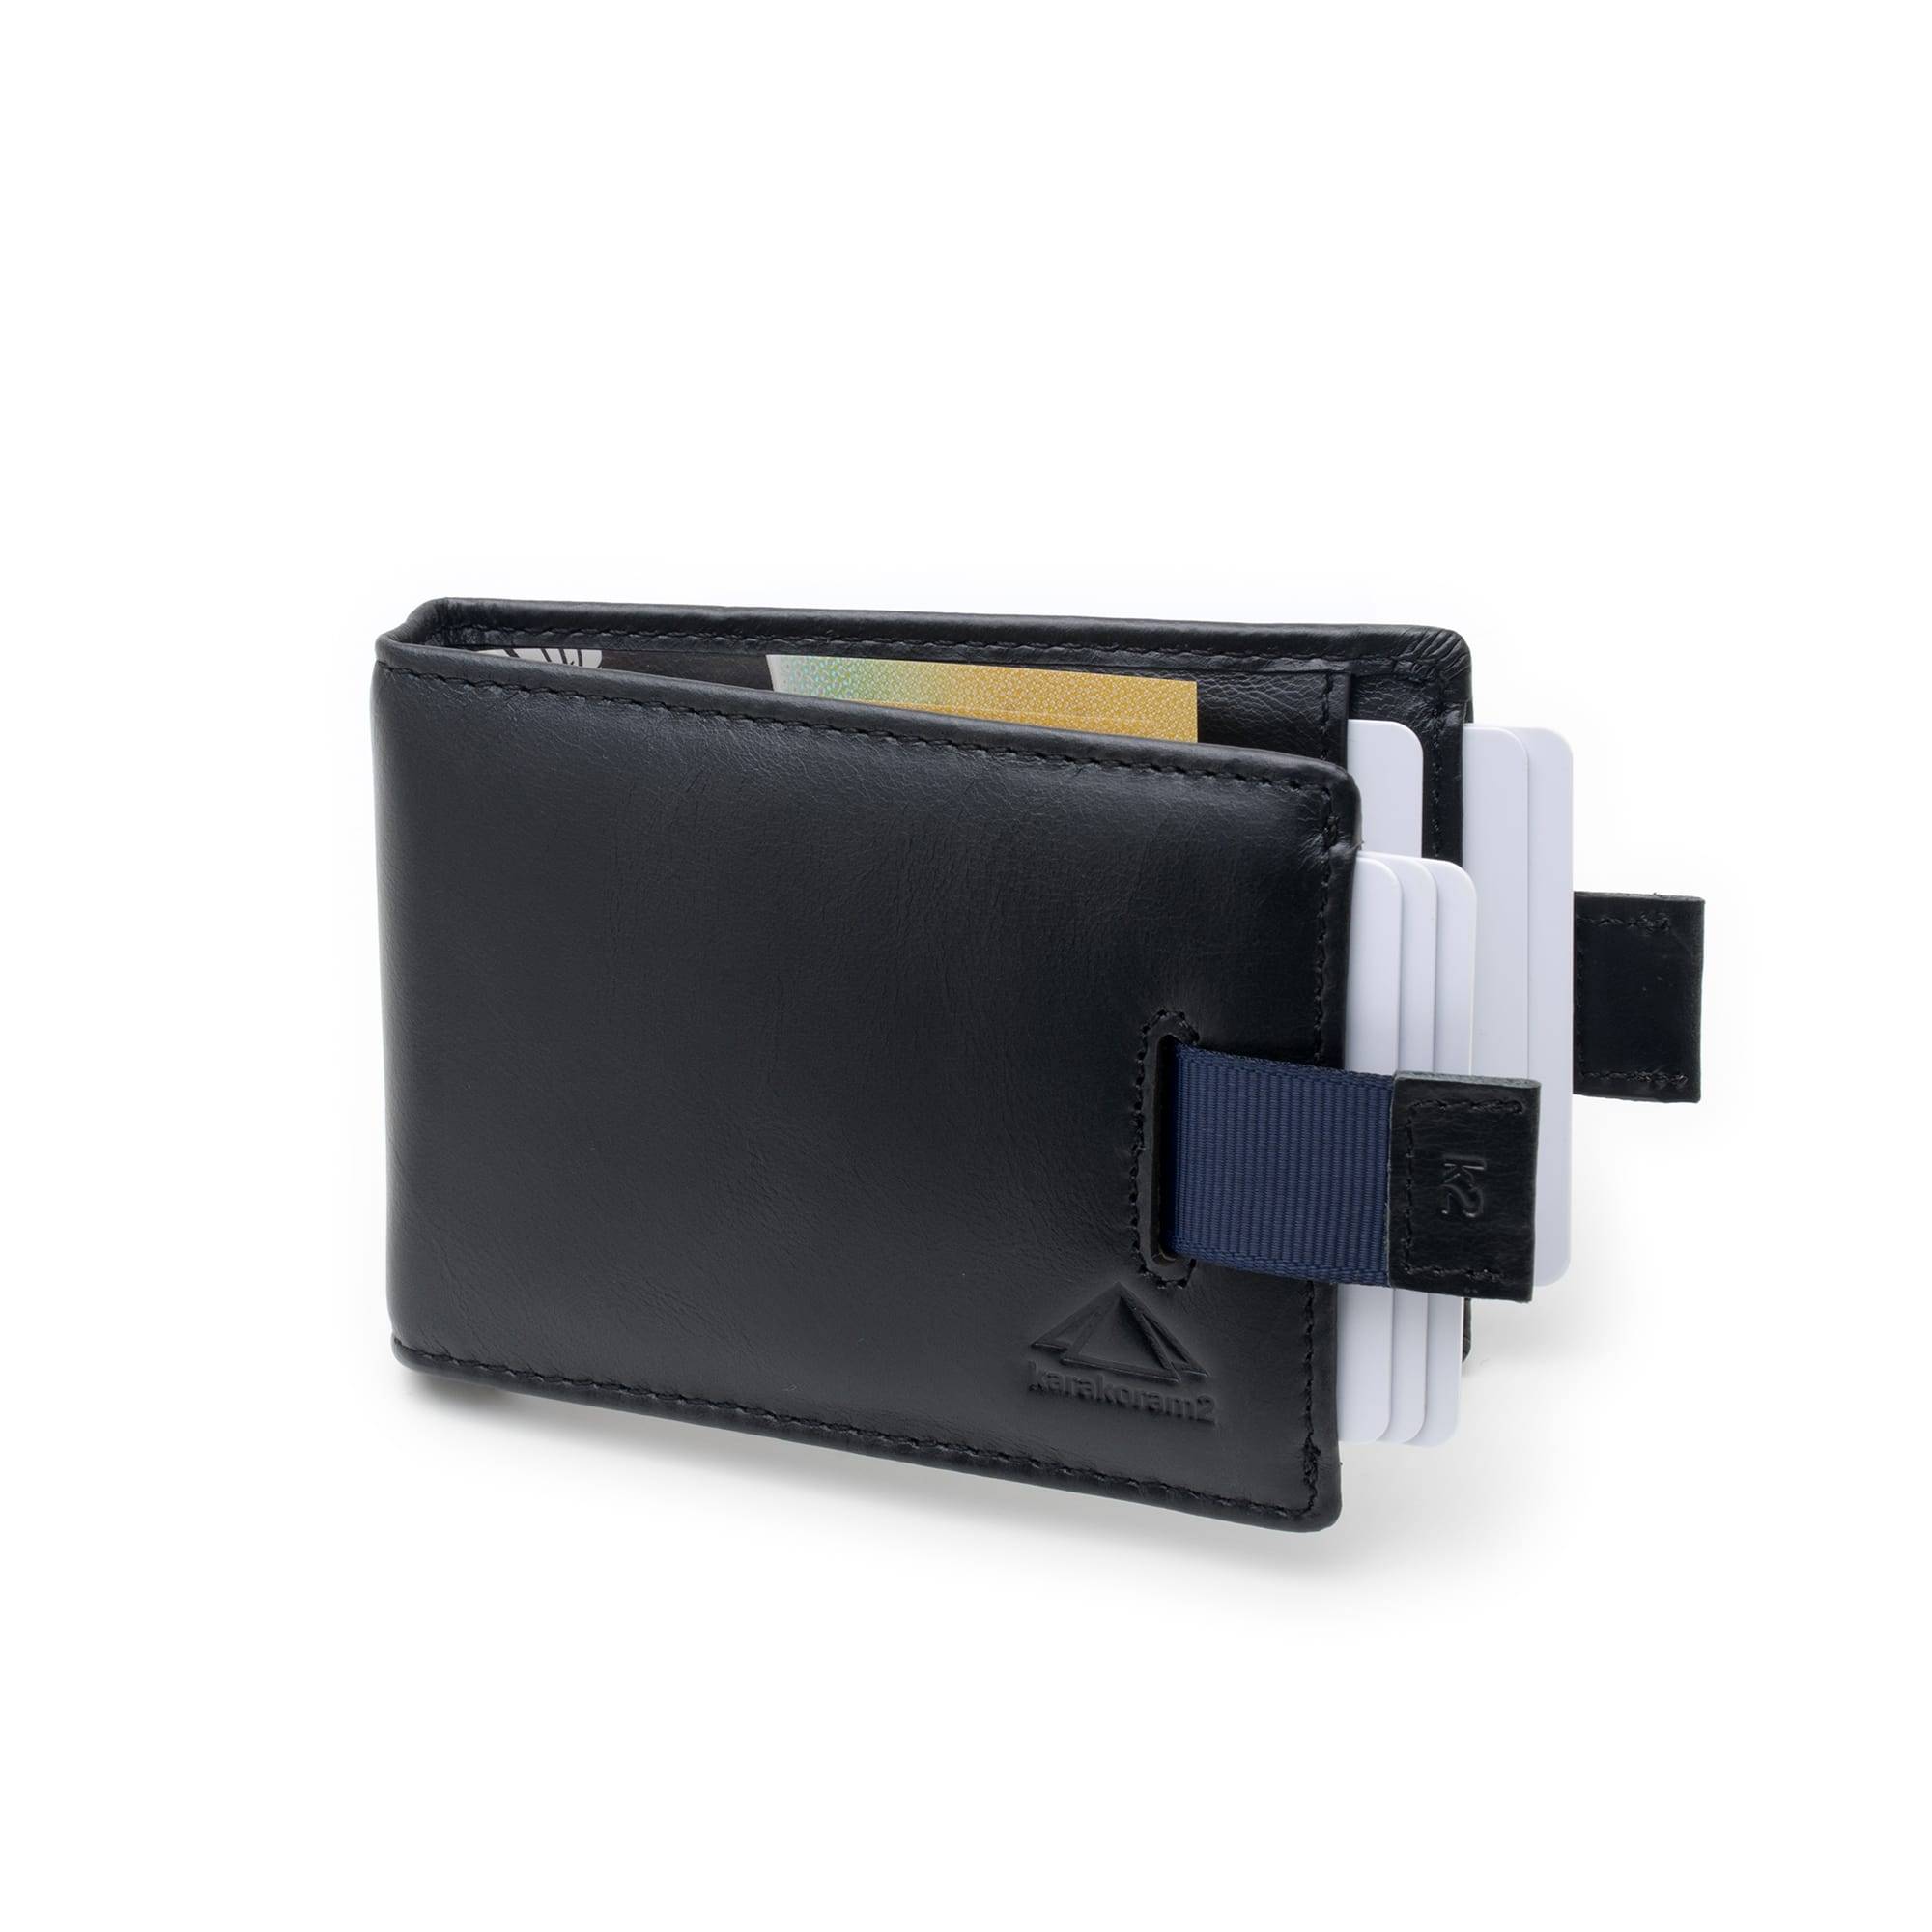 Karakoram2 Money Clip mens wallet Australia black leather RFID slim